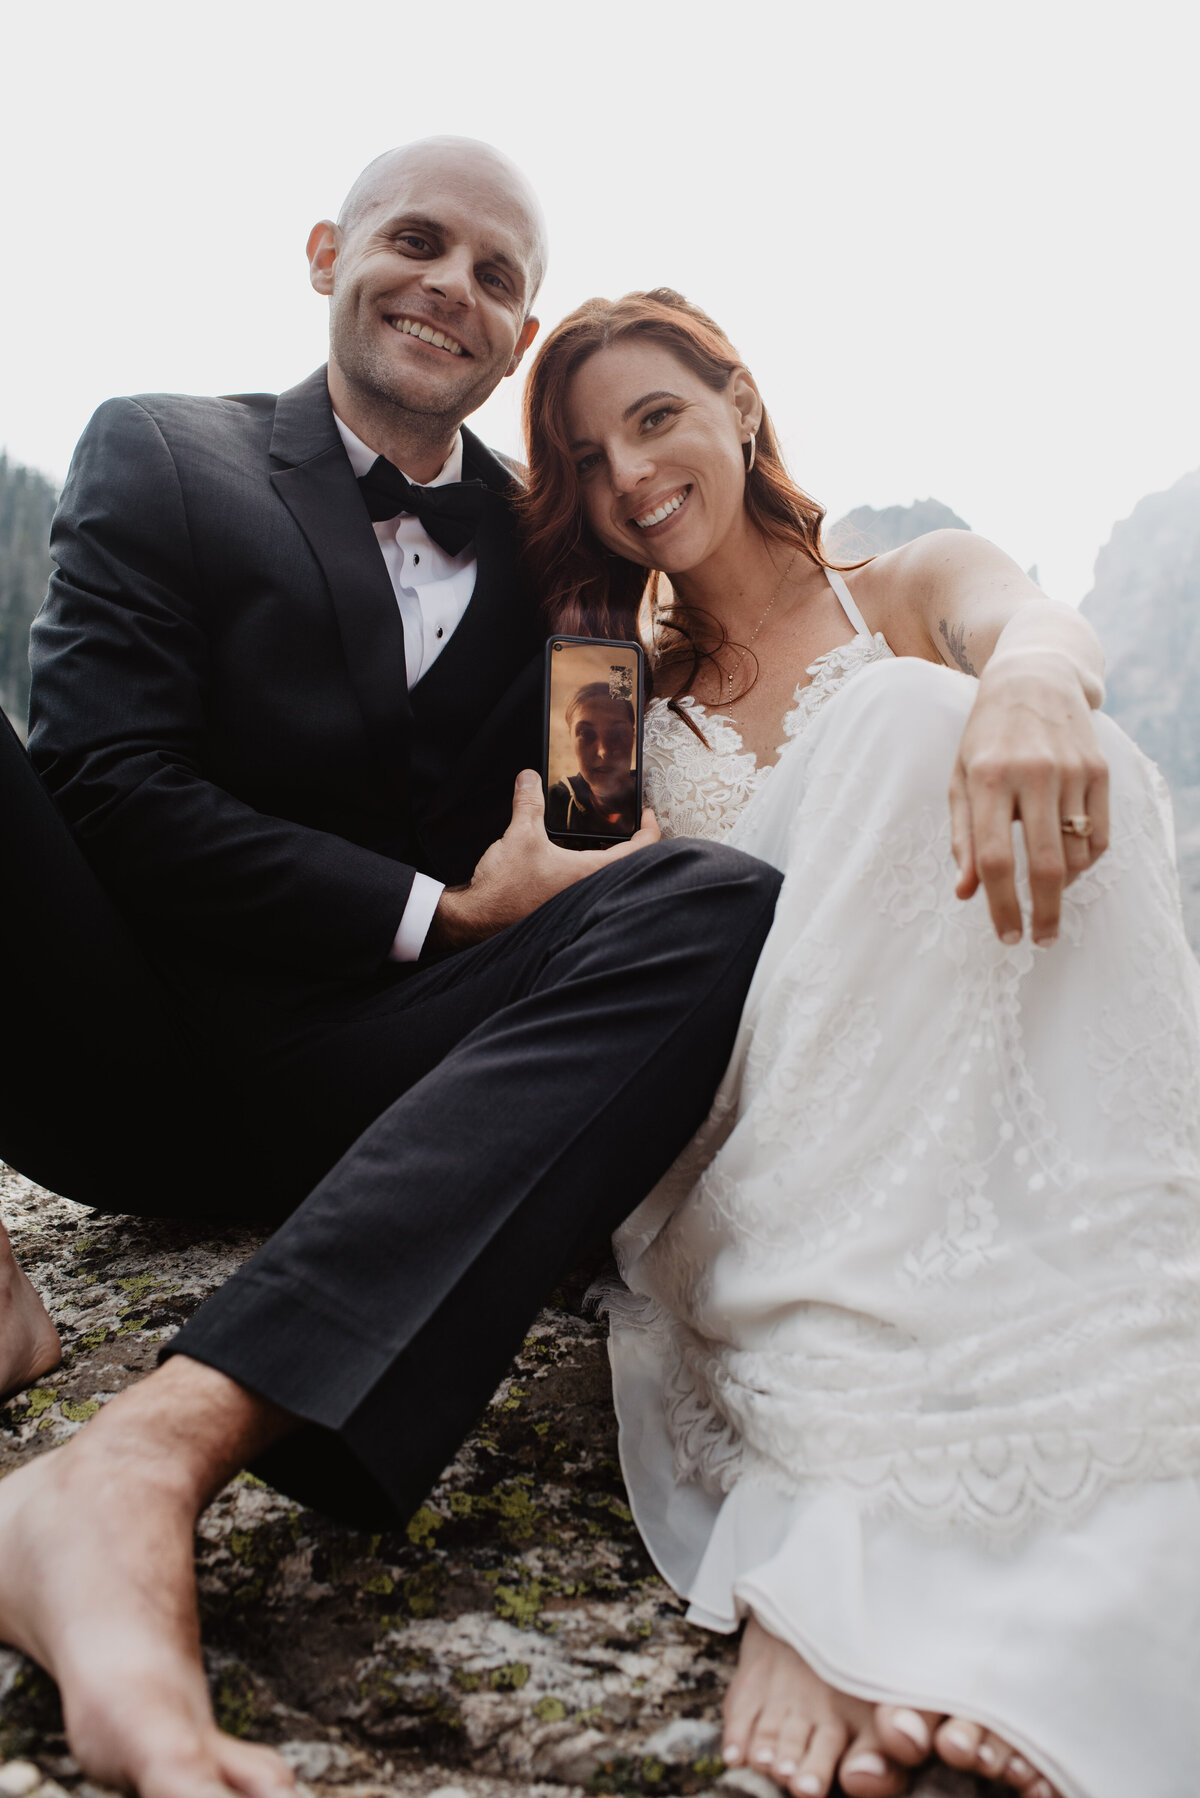 Jackson Hole photographers capture bride and groom barefoot